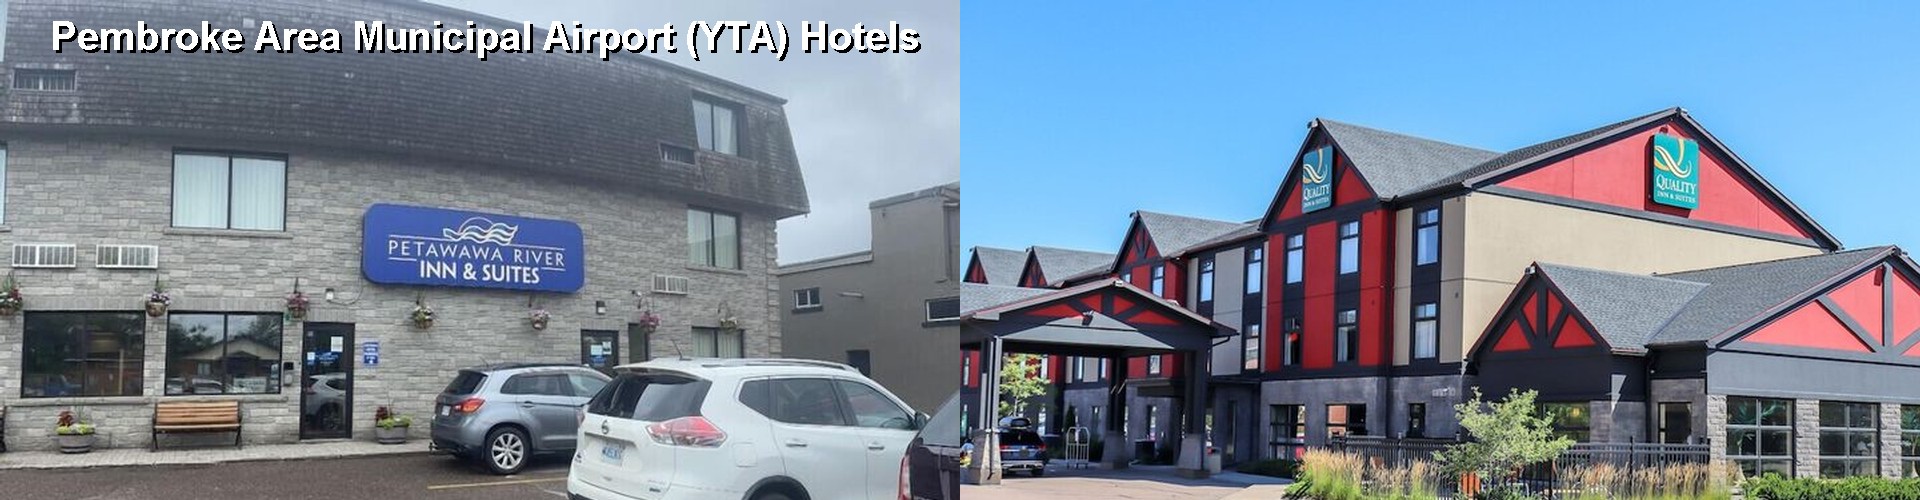 5 Best Hotels near Pembroke Area Municipal Airport (YTA)